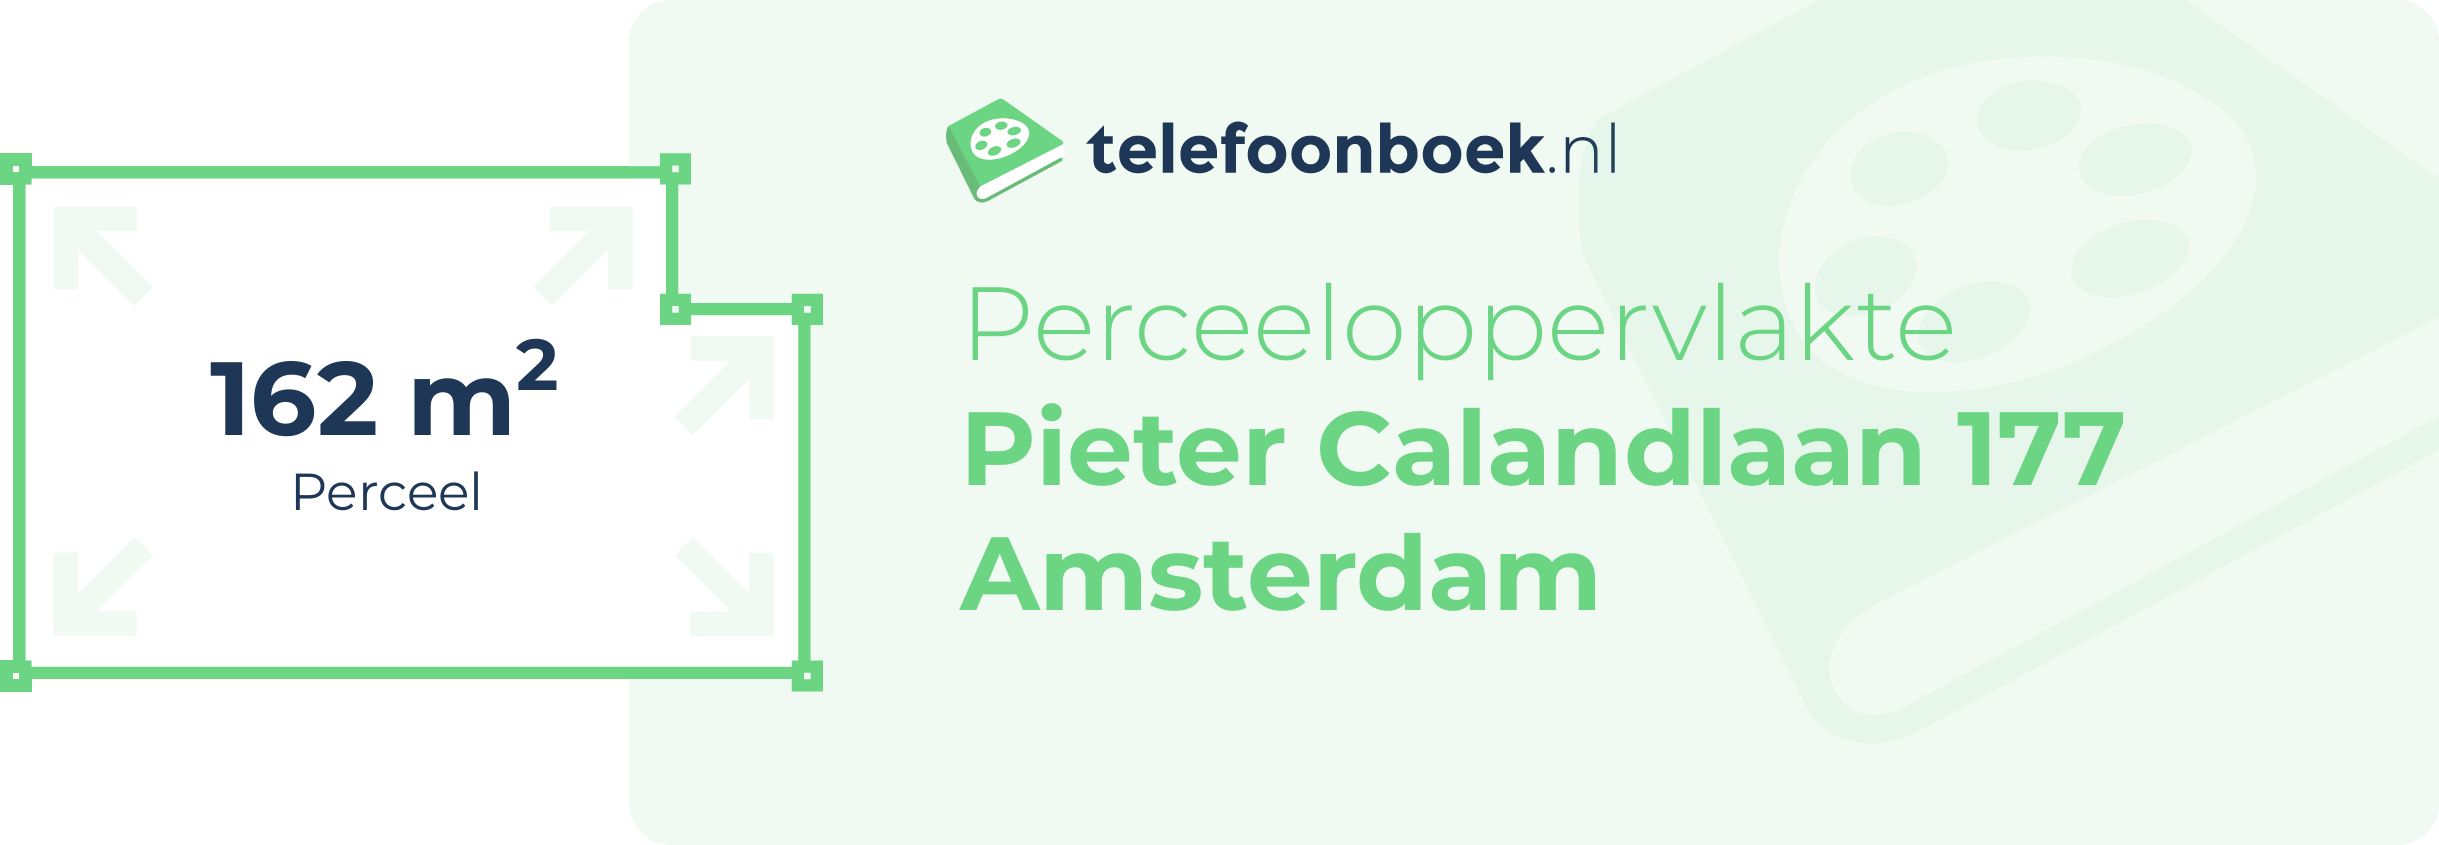 Perceeloppervlakte Pieter Calandlaan 177 Amsterdam